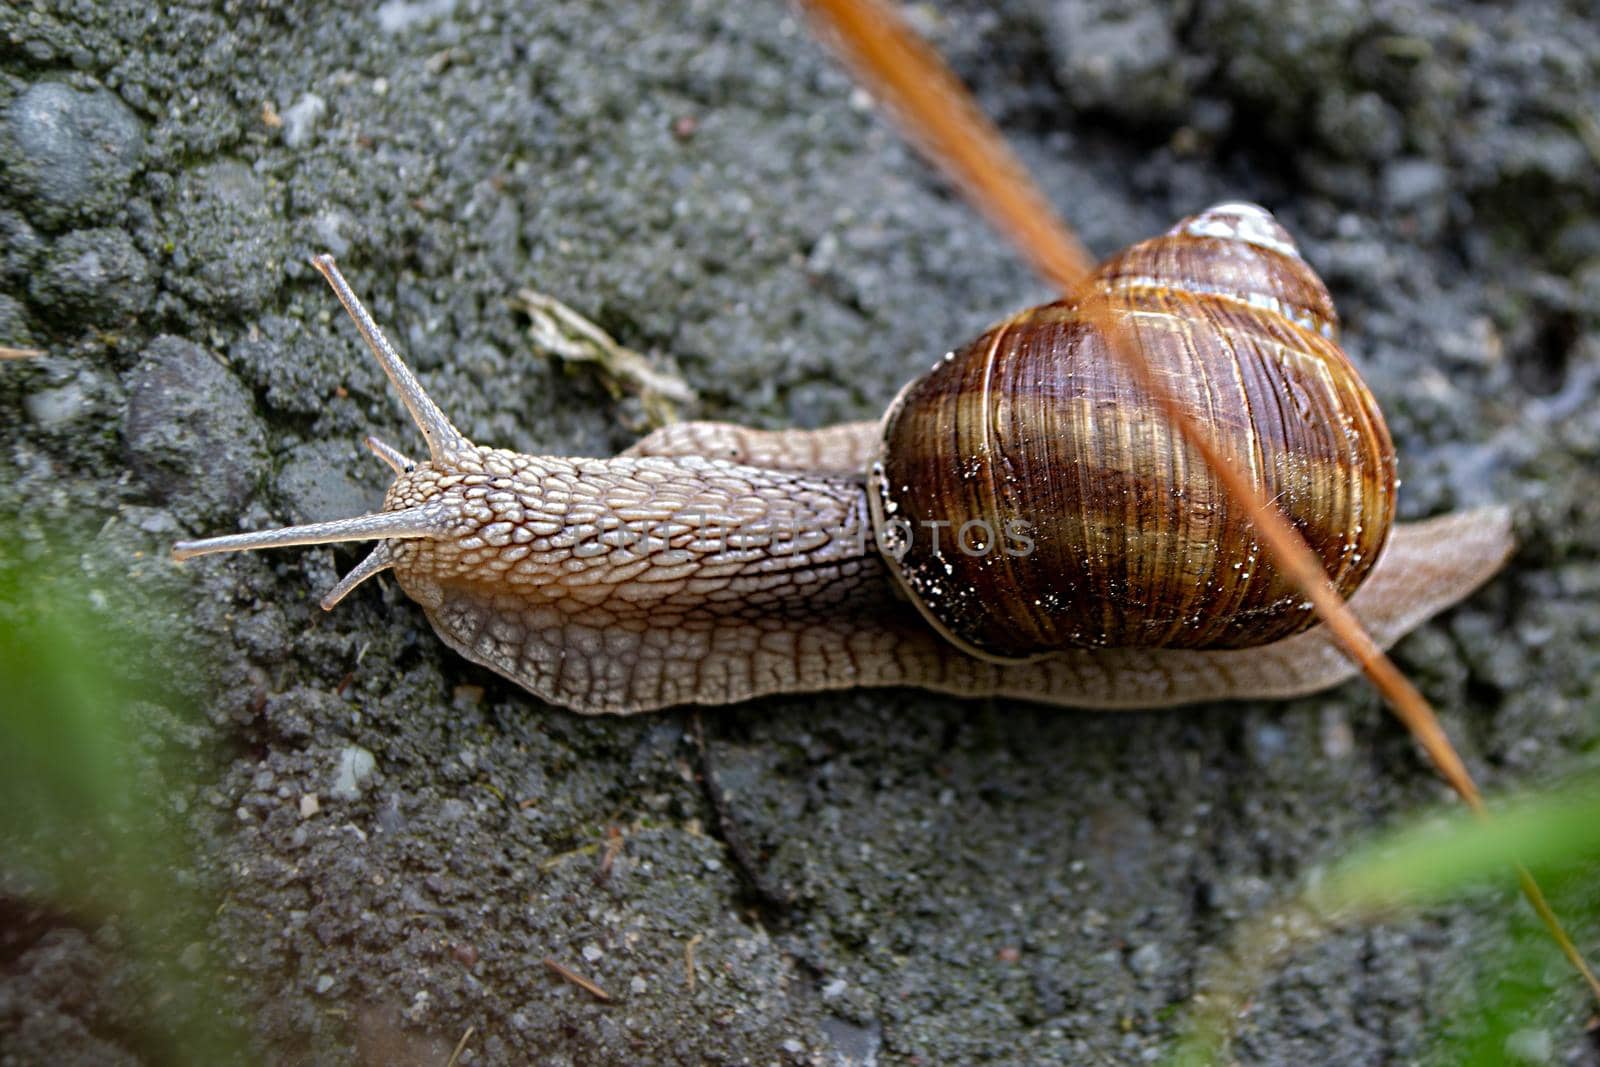 Roman Snail - Helix pomatia, common snail by milastokerpro